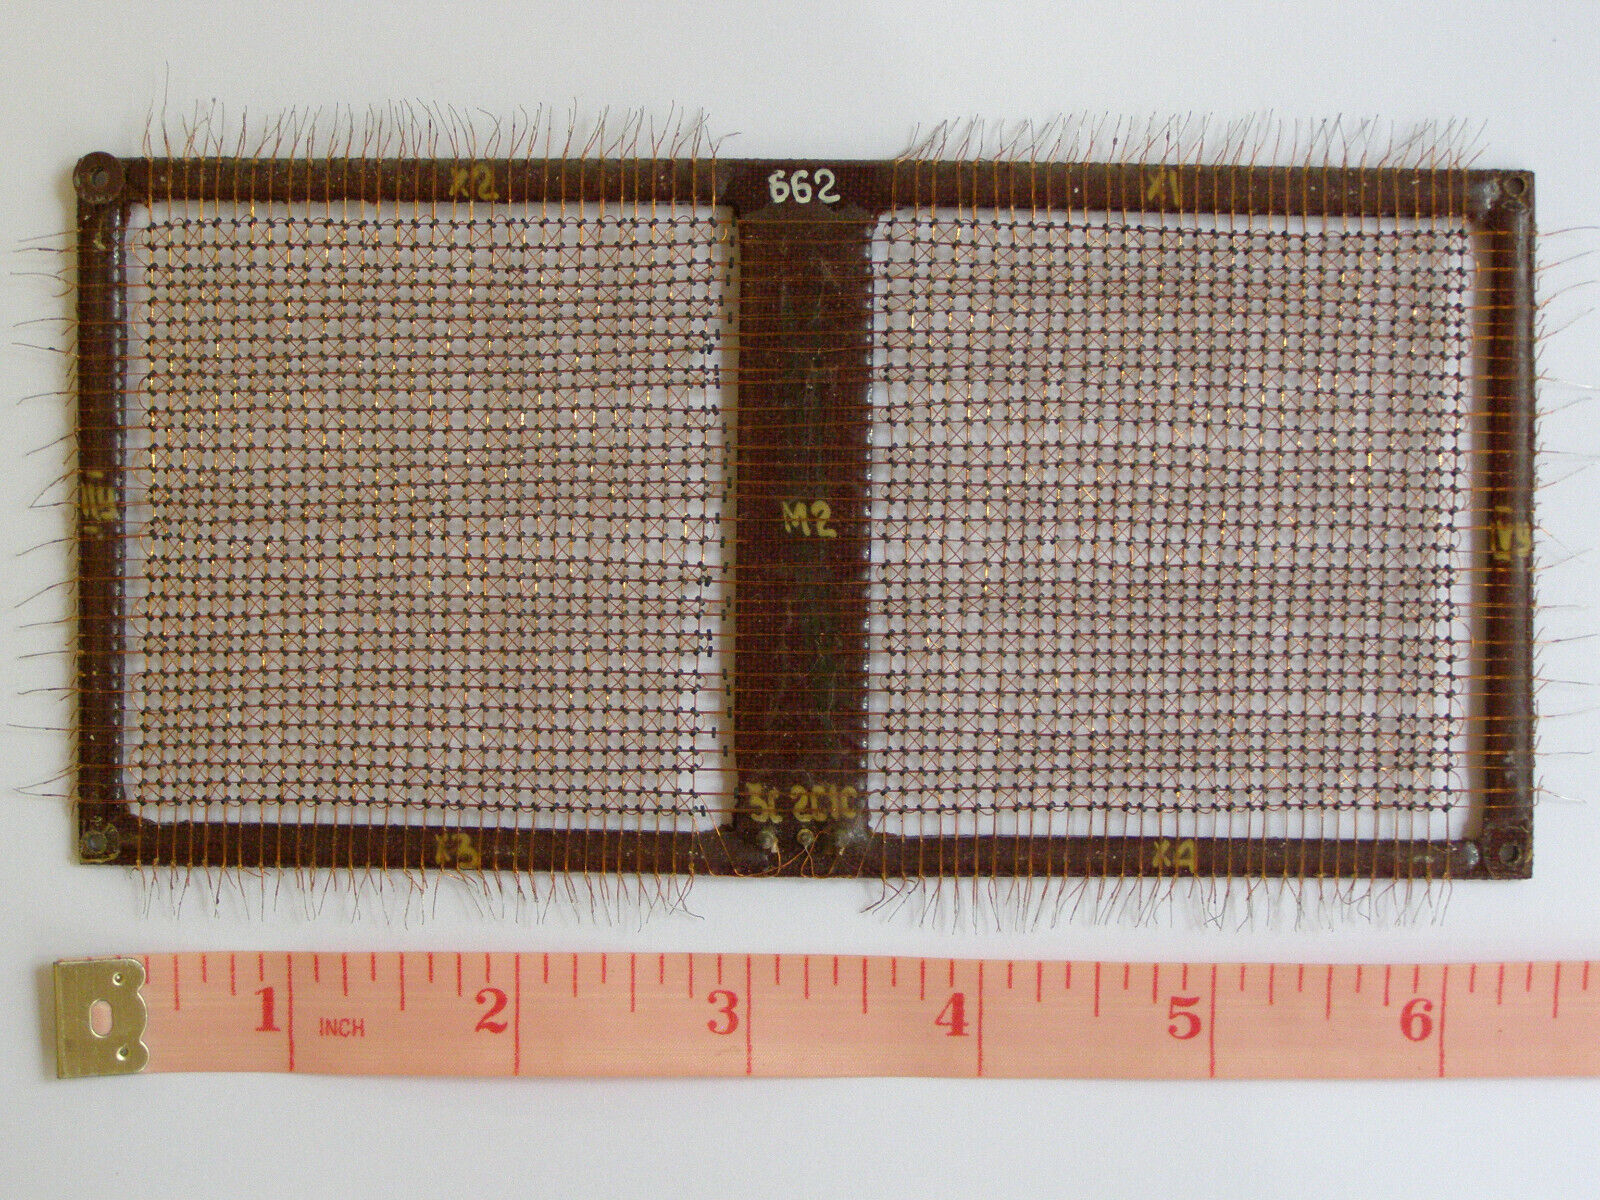 USSR Soviet RAM Magnetic Ferrite Core Memory M2 Plate 256 byte 1975 SKU: 101